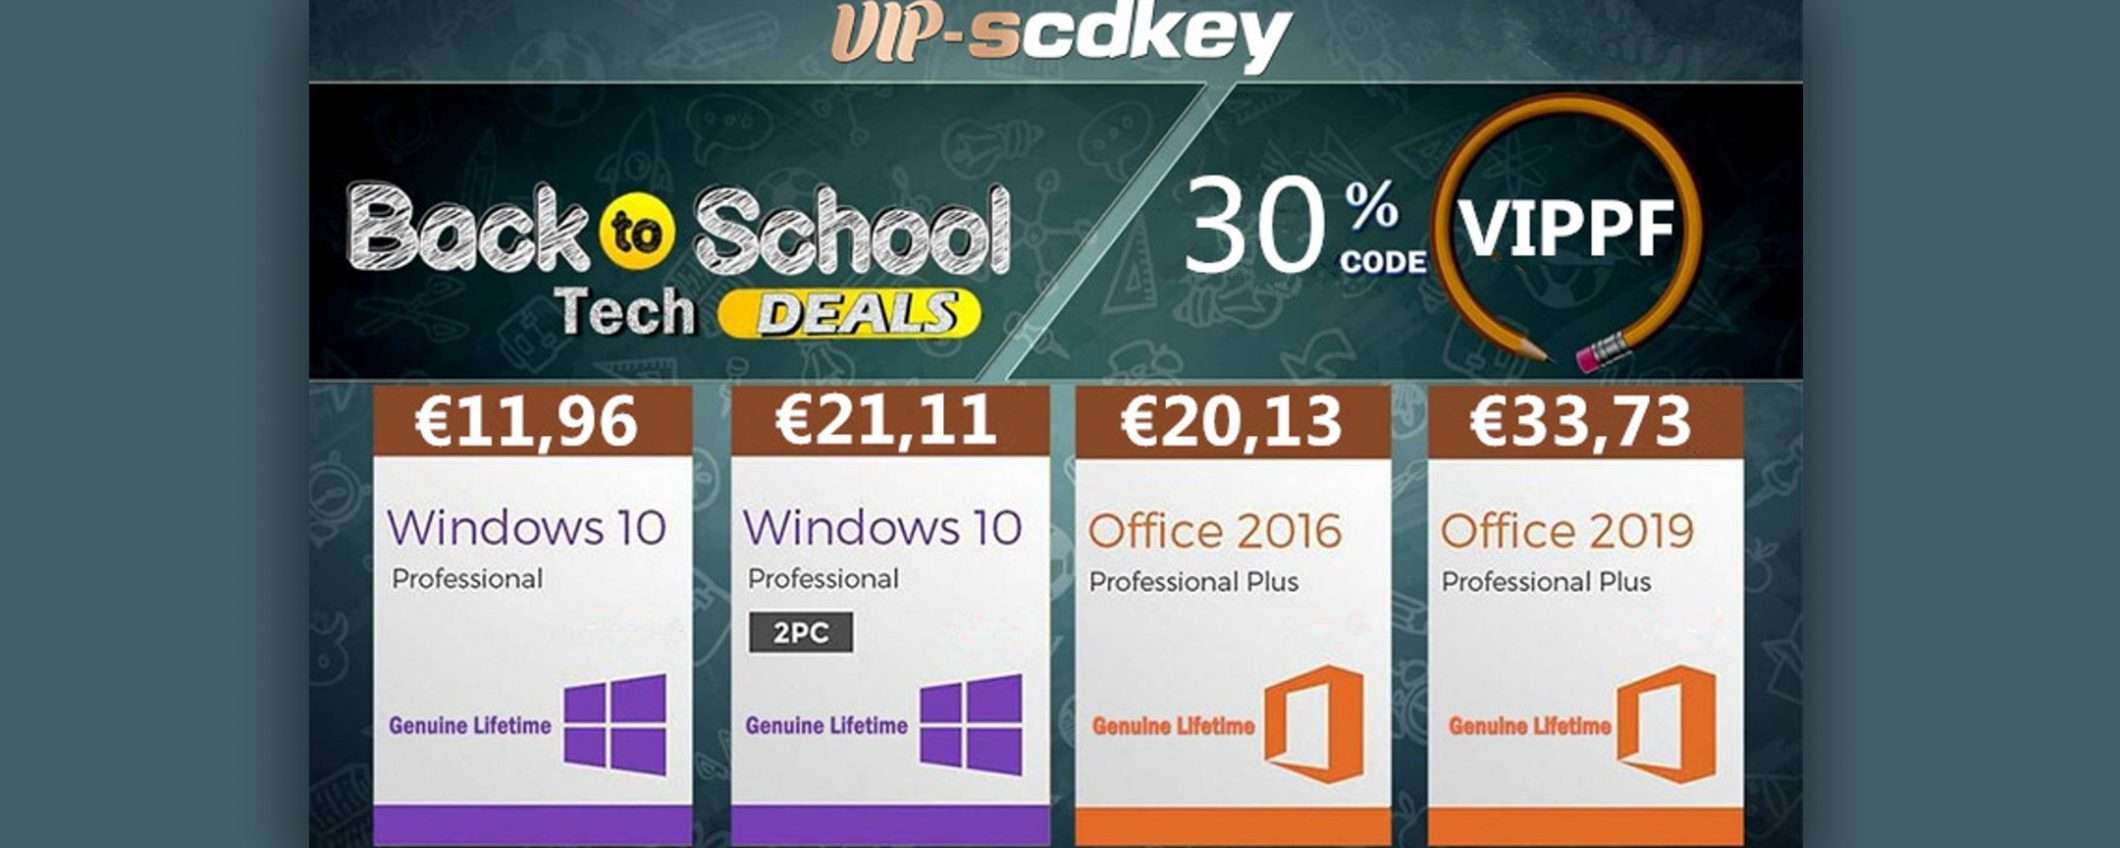 VIP-SCDkey Back to School: Windows 10 PRO OEM a €11